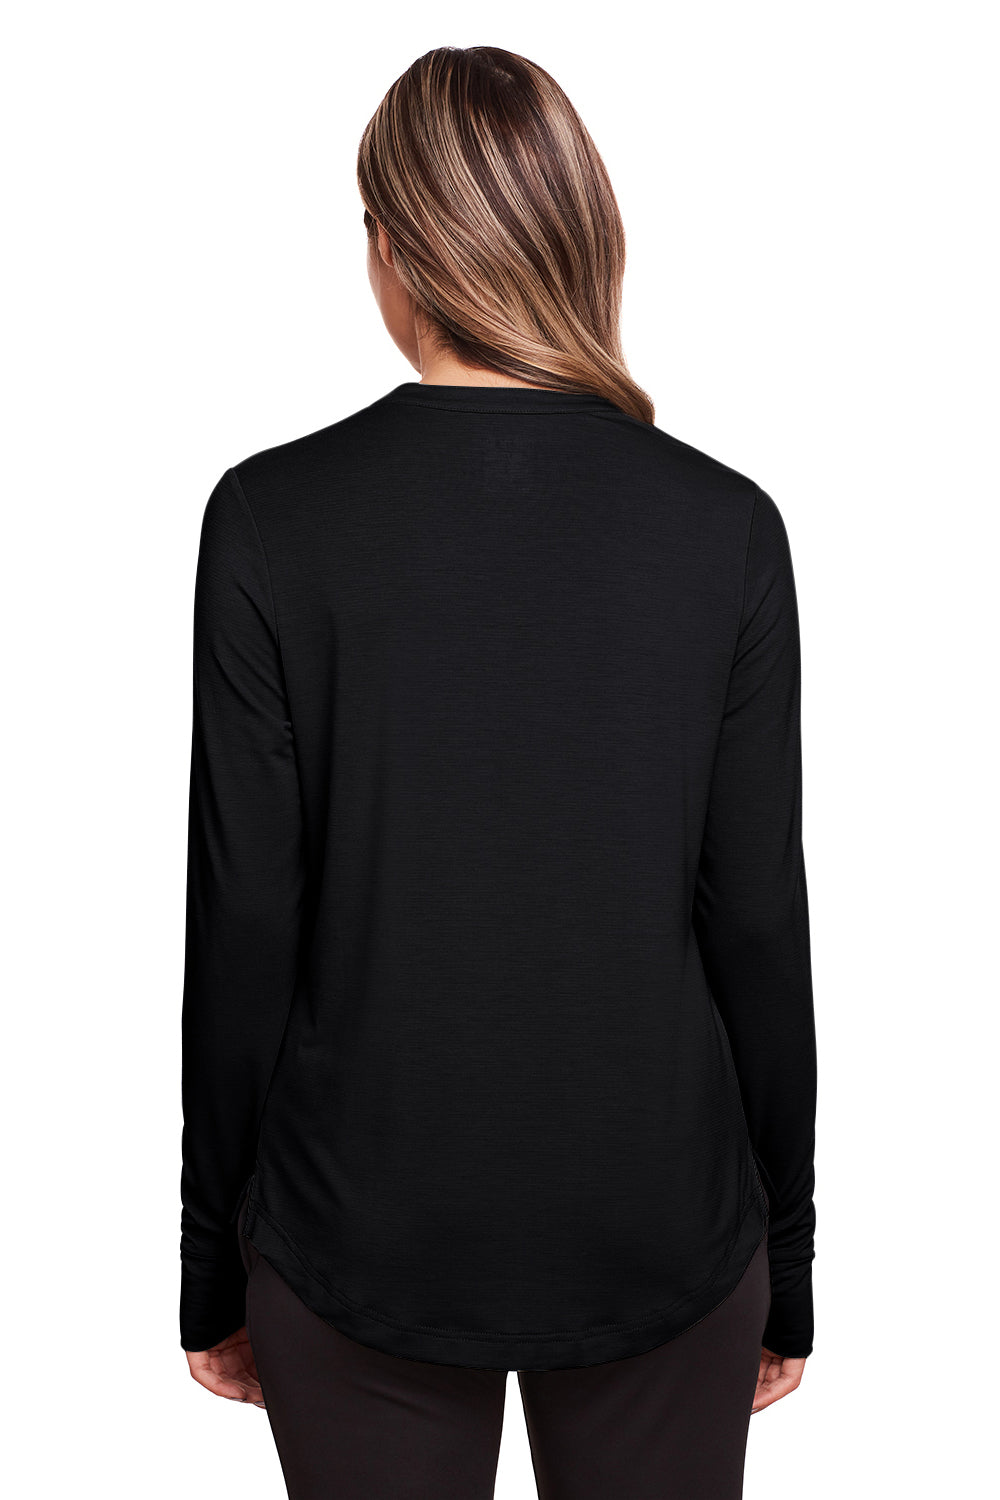 North End NE400W Womens Jaq Performance Moisture Wicking Long Sleeve Polo Shirt Black Back